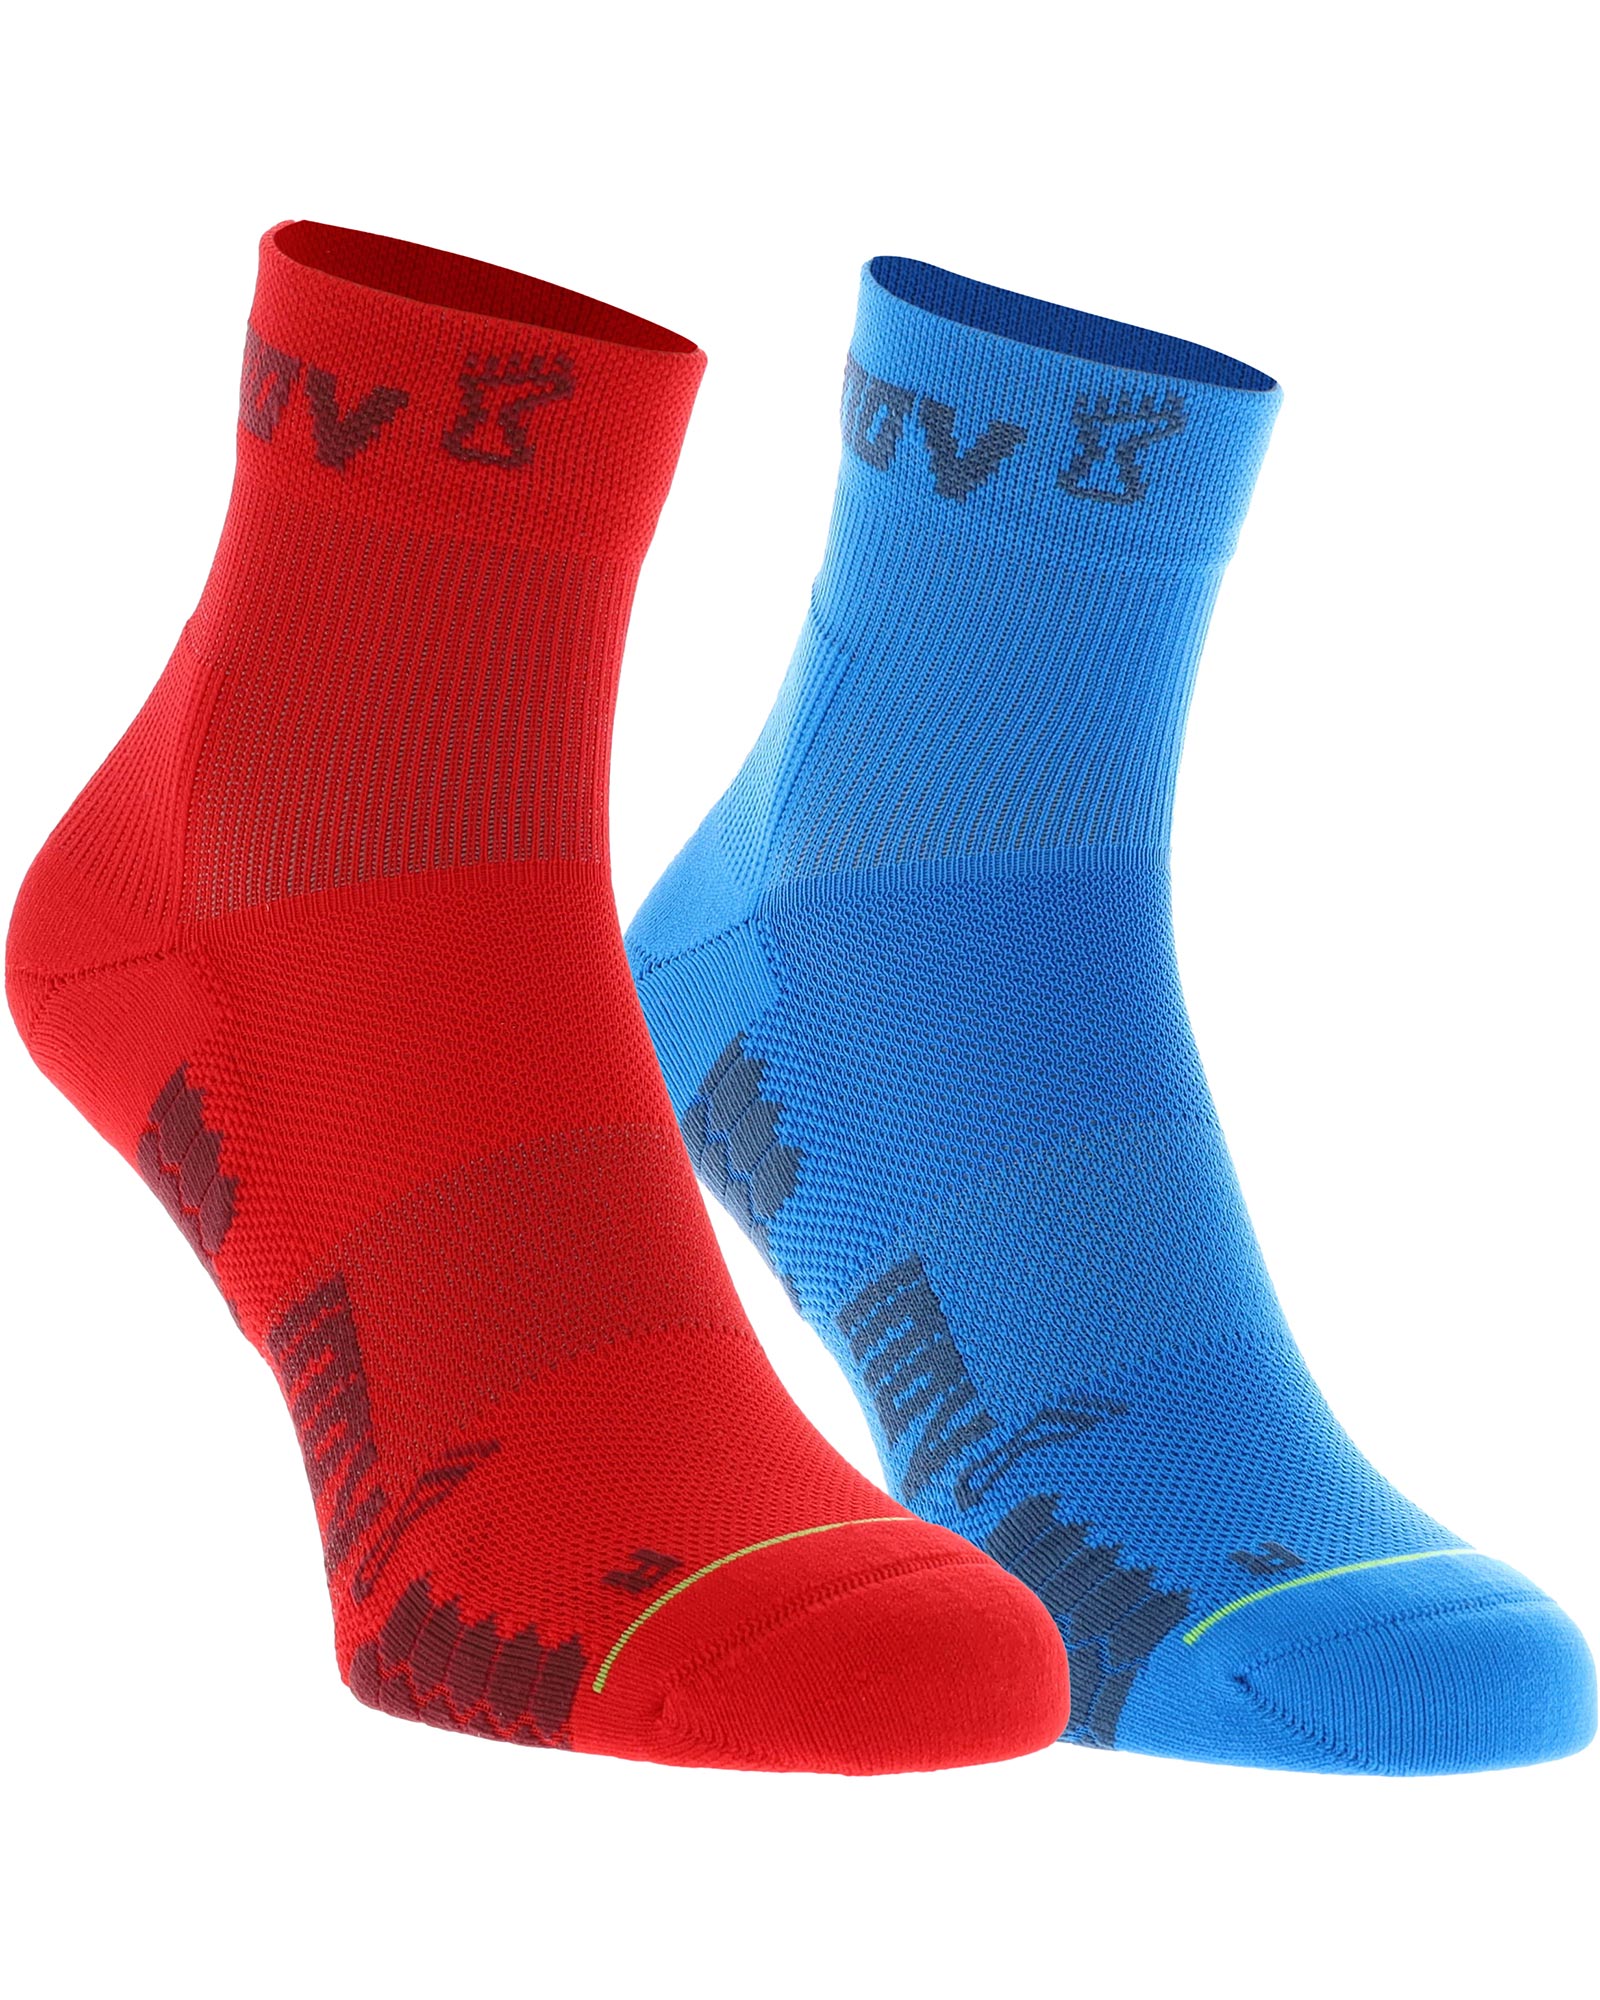 Inov 8 Trailfly Mid Socks - Blue/Red M